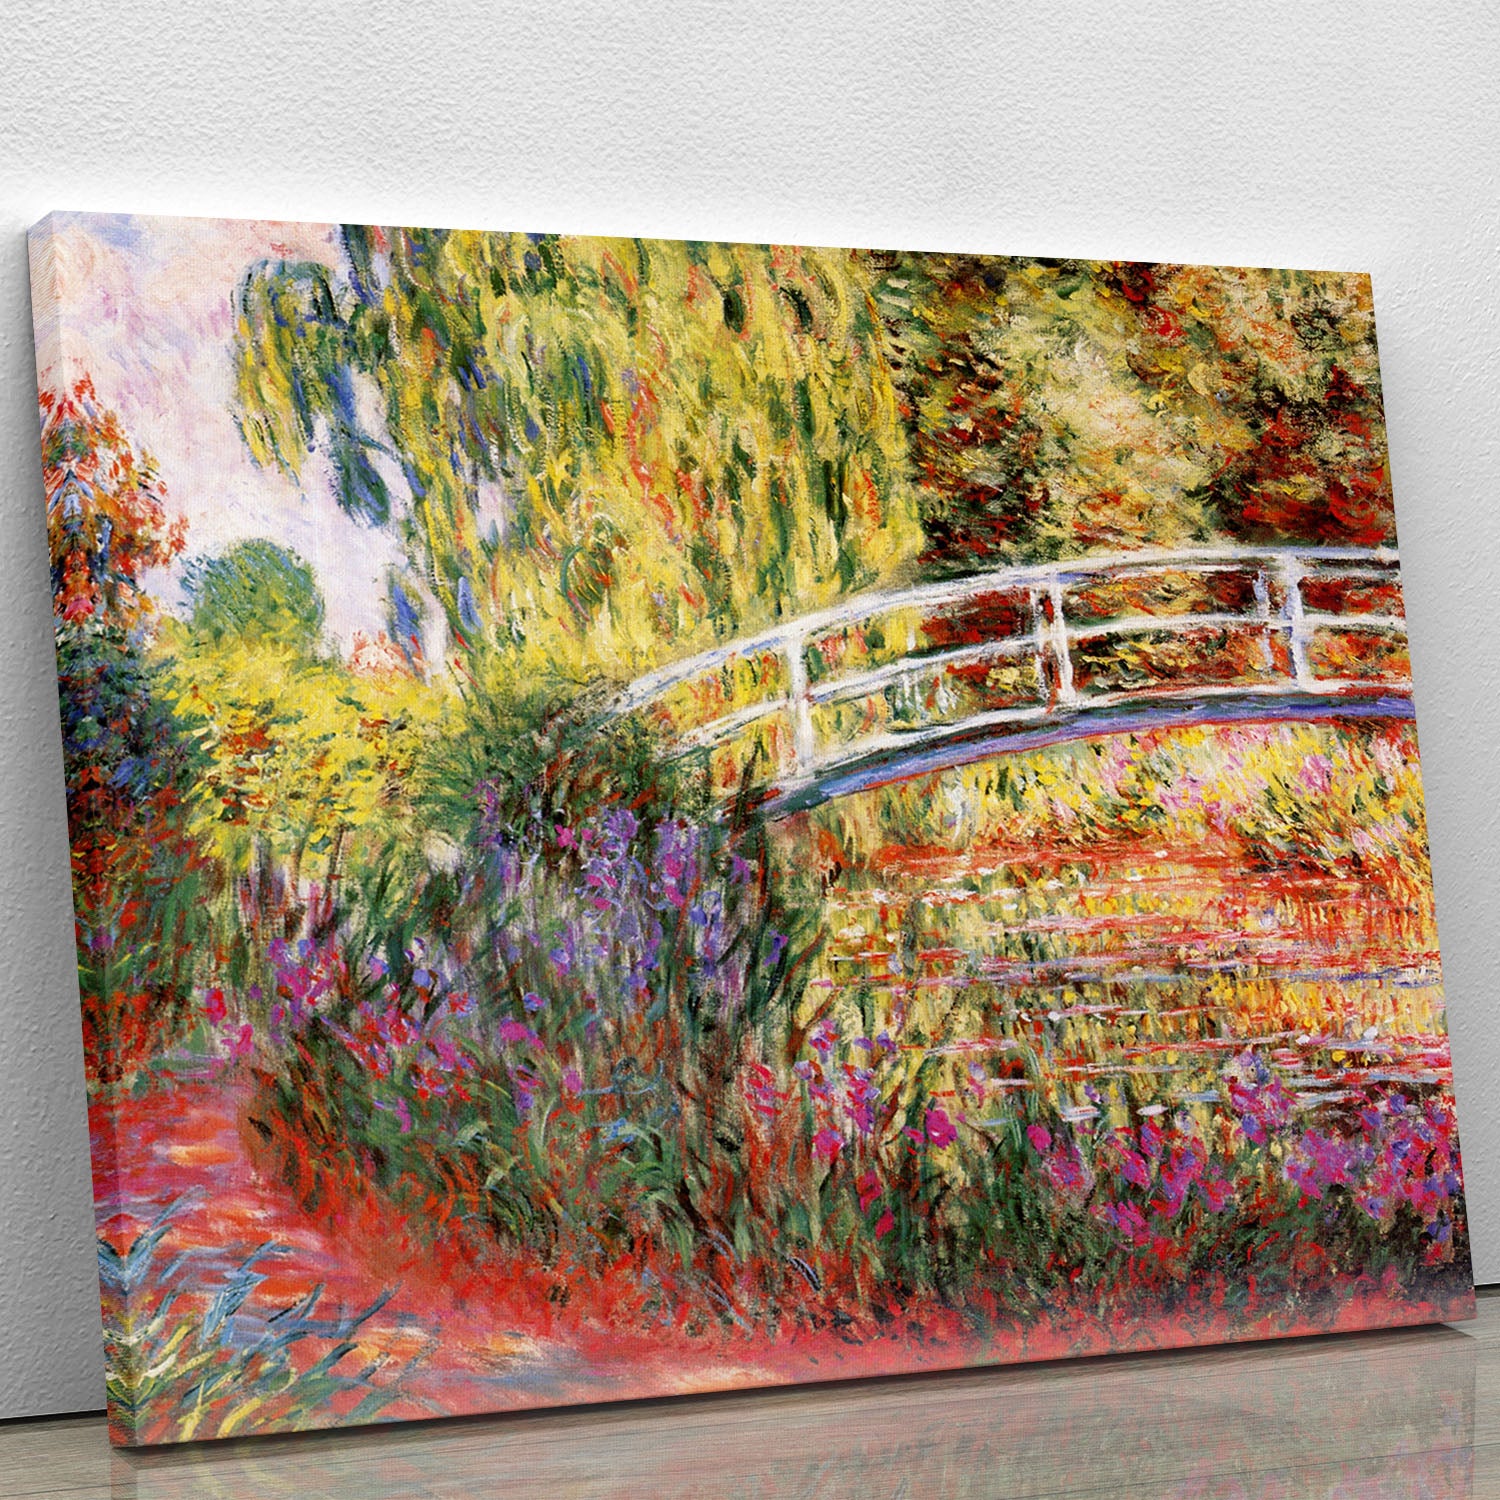 Le Bassin aux Nympheas by Monet Canvas Print or Poster - Canvas Art Rocks - 1